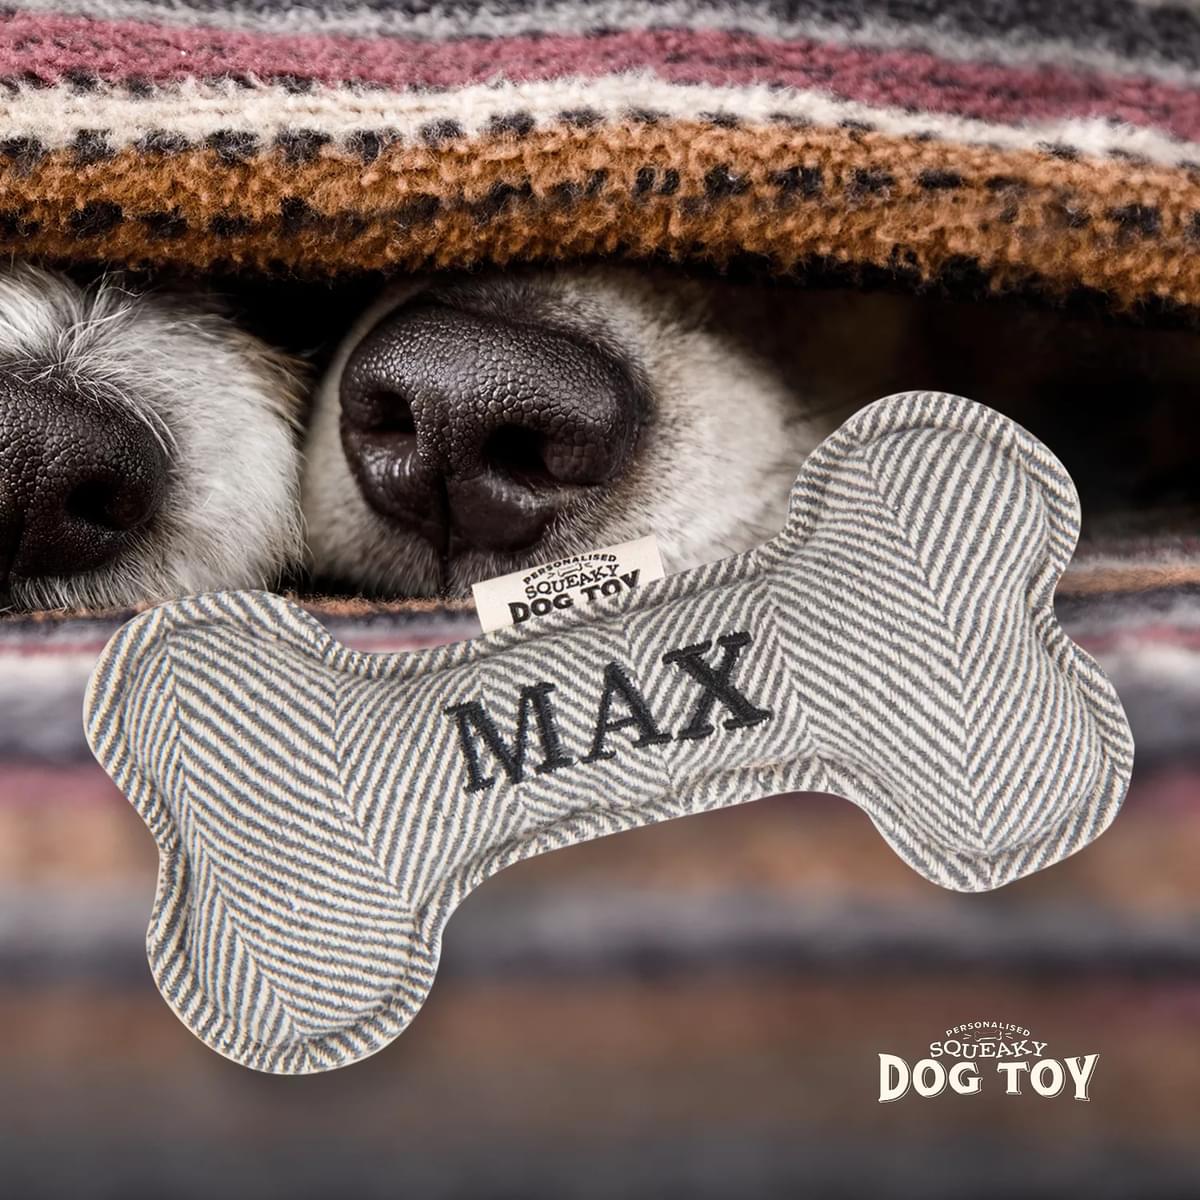 Named Squeaky Dog Toy- Max. Bone shaped herringbone tweed pattern dog toy. 